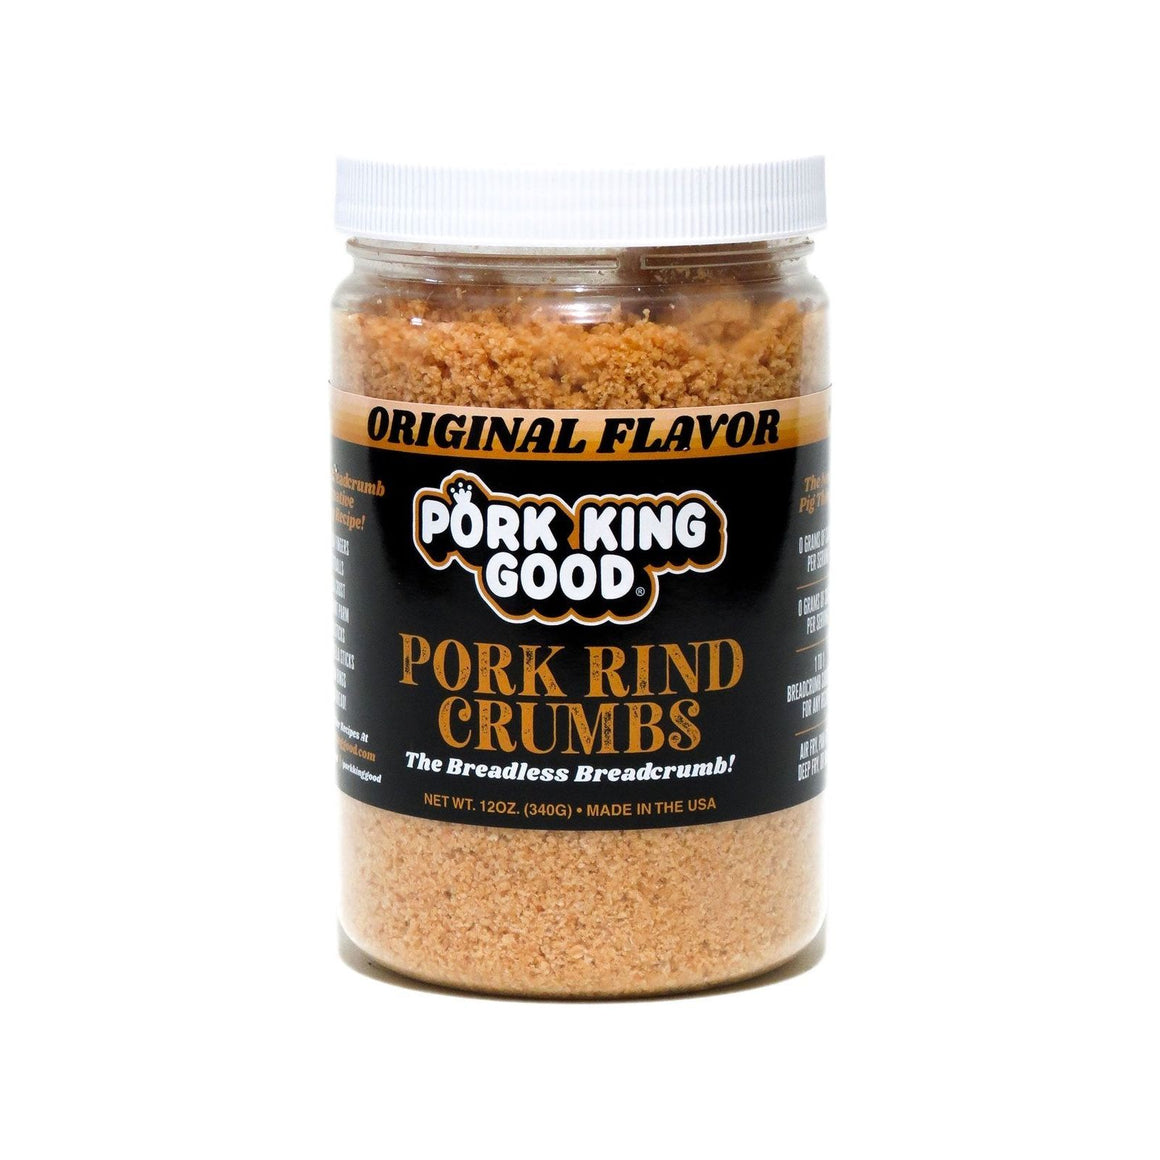 Pork King Good - Pork Rind Crumbs - Original - 12 oz jar